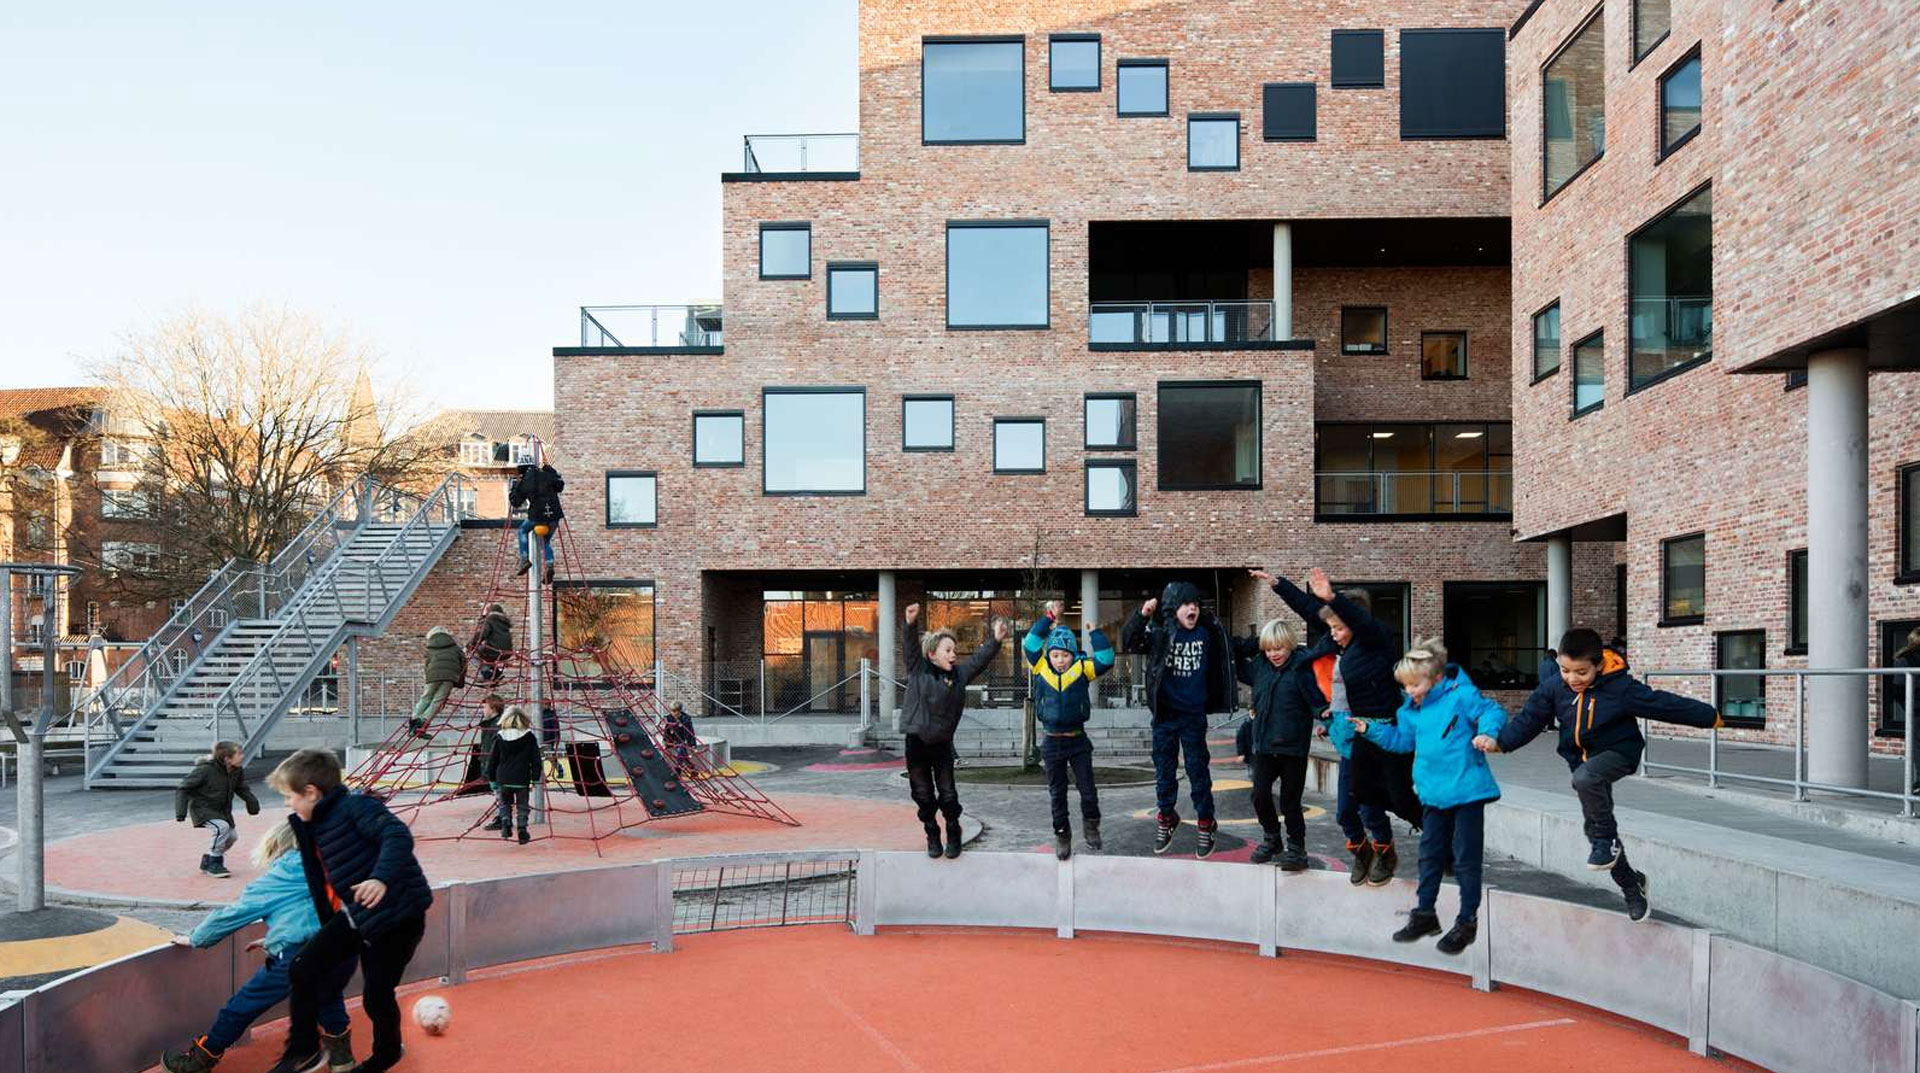 Детский сад в дании. Школа Дании архитектура. Школа архитектуры – Aho, Осло. Норвегия.